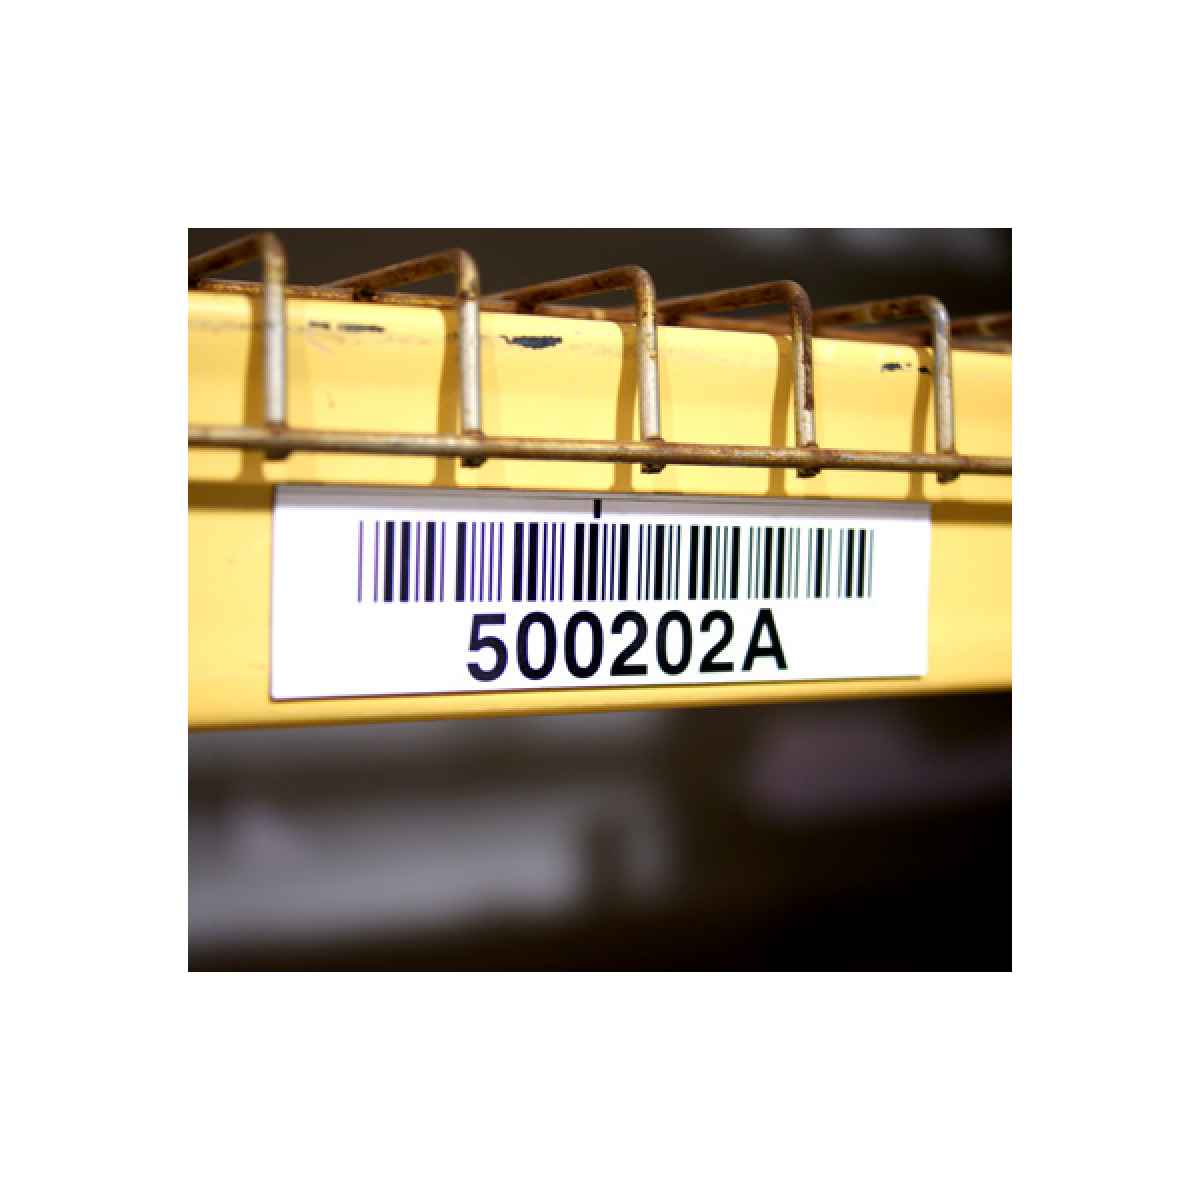 Custom printed, magnetic barcode label on rack 